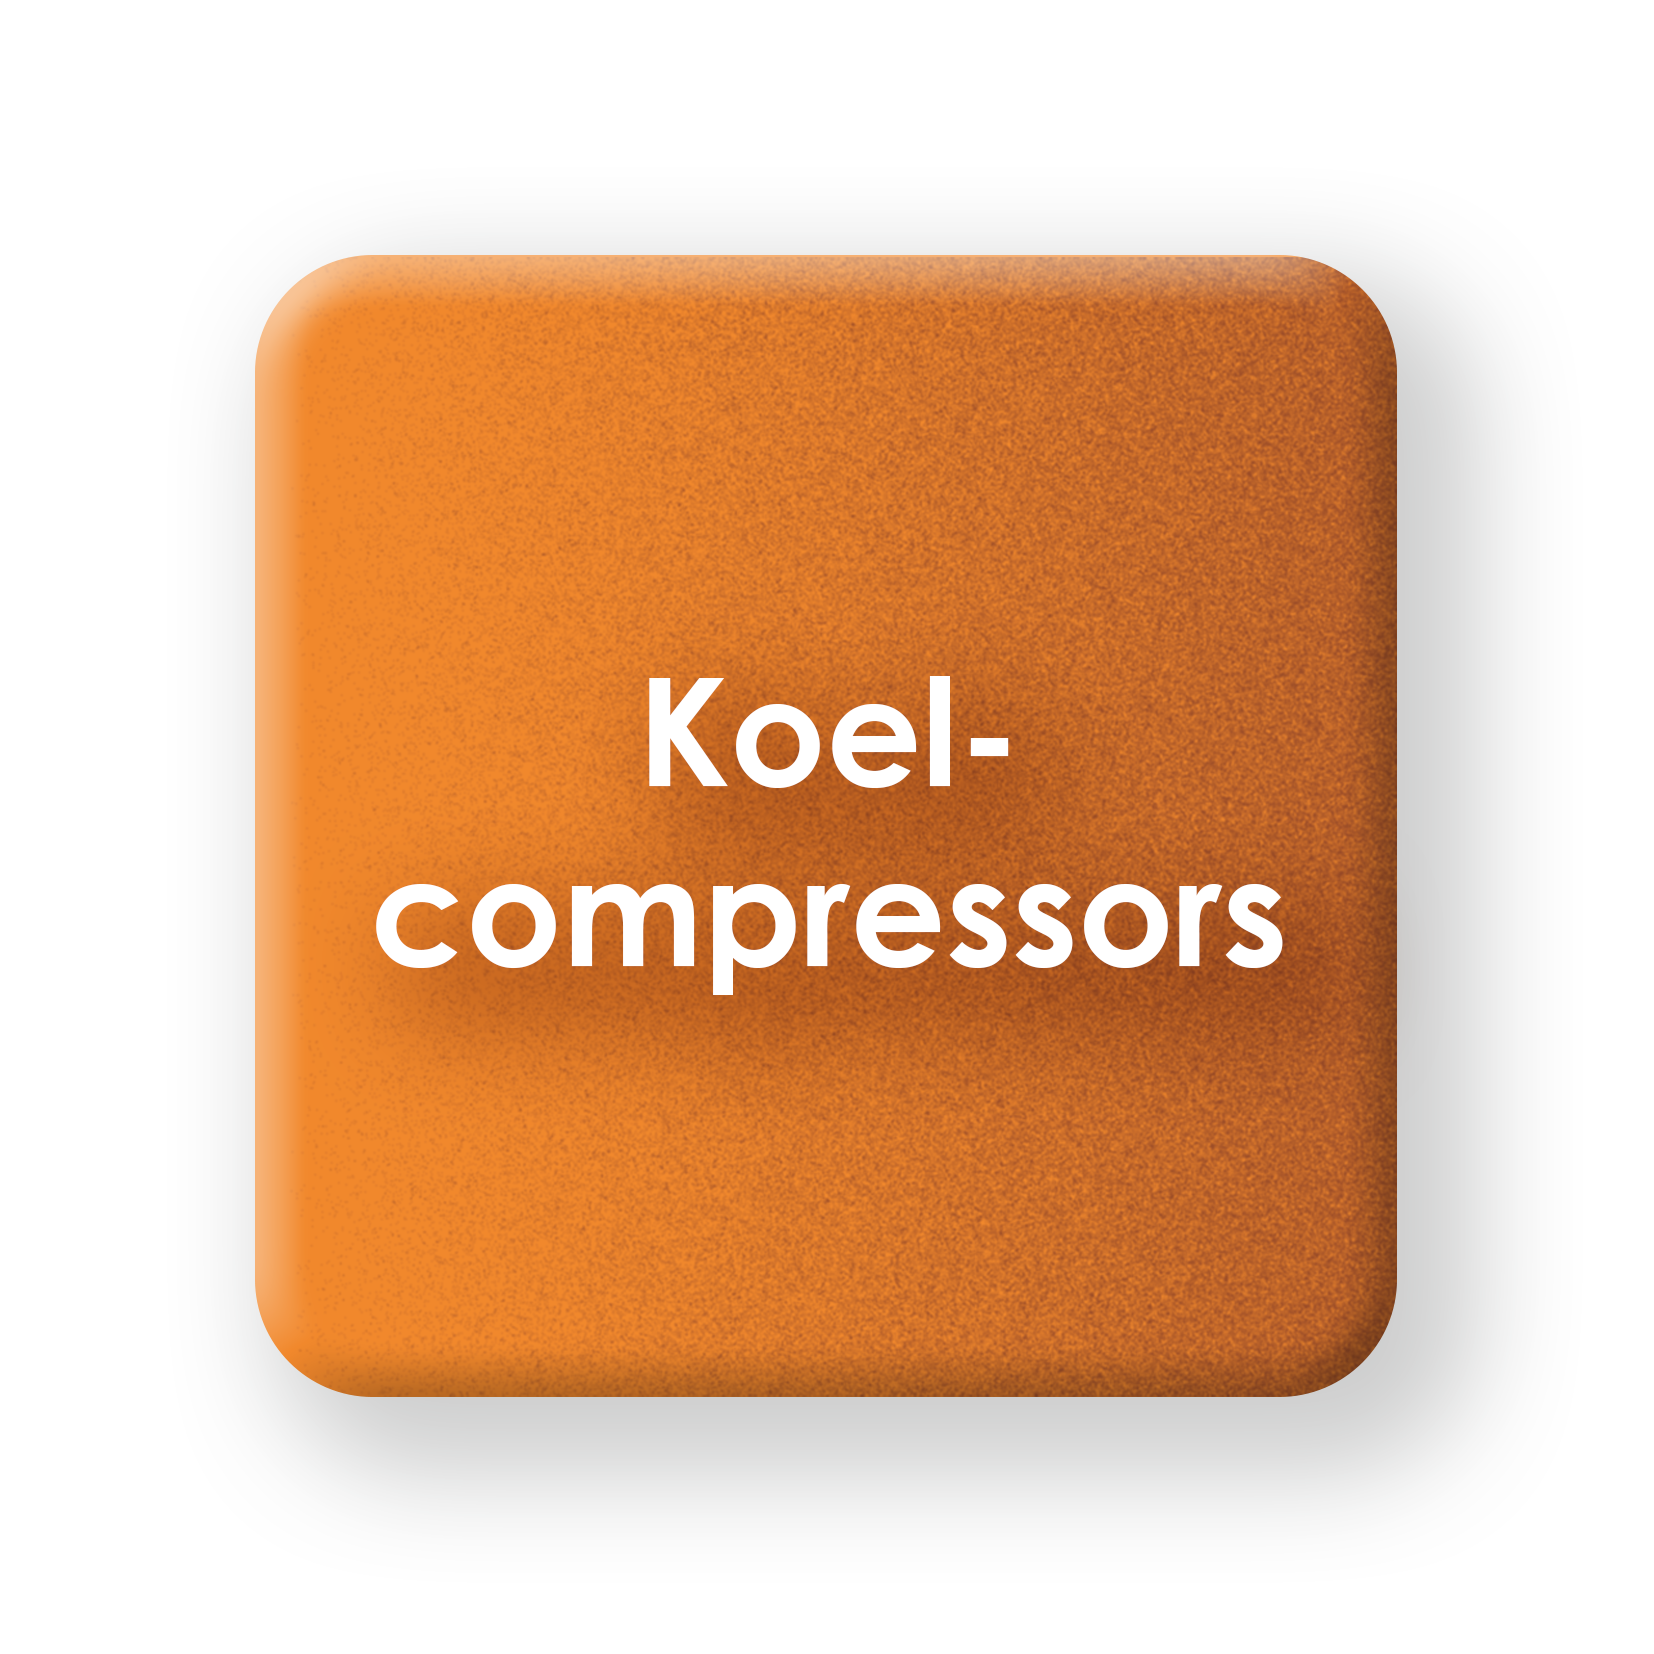 Koelcompressors